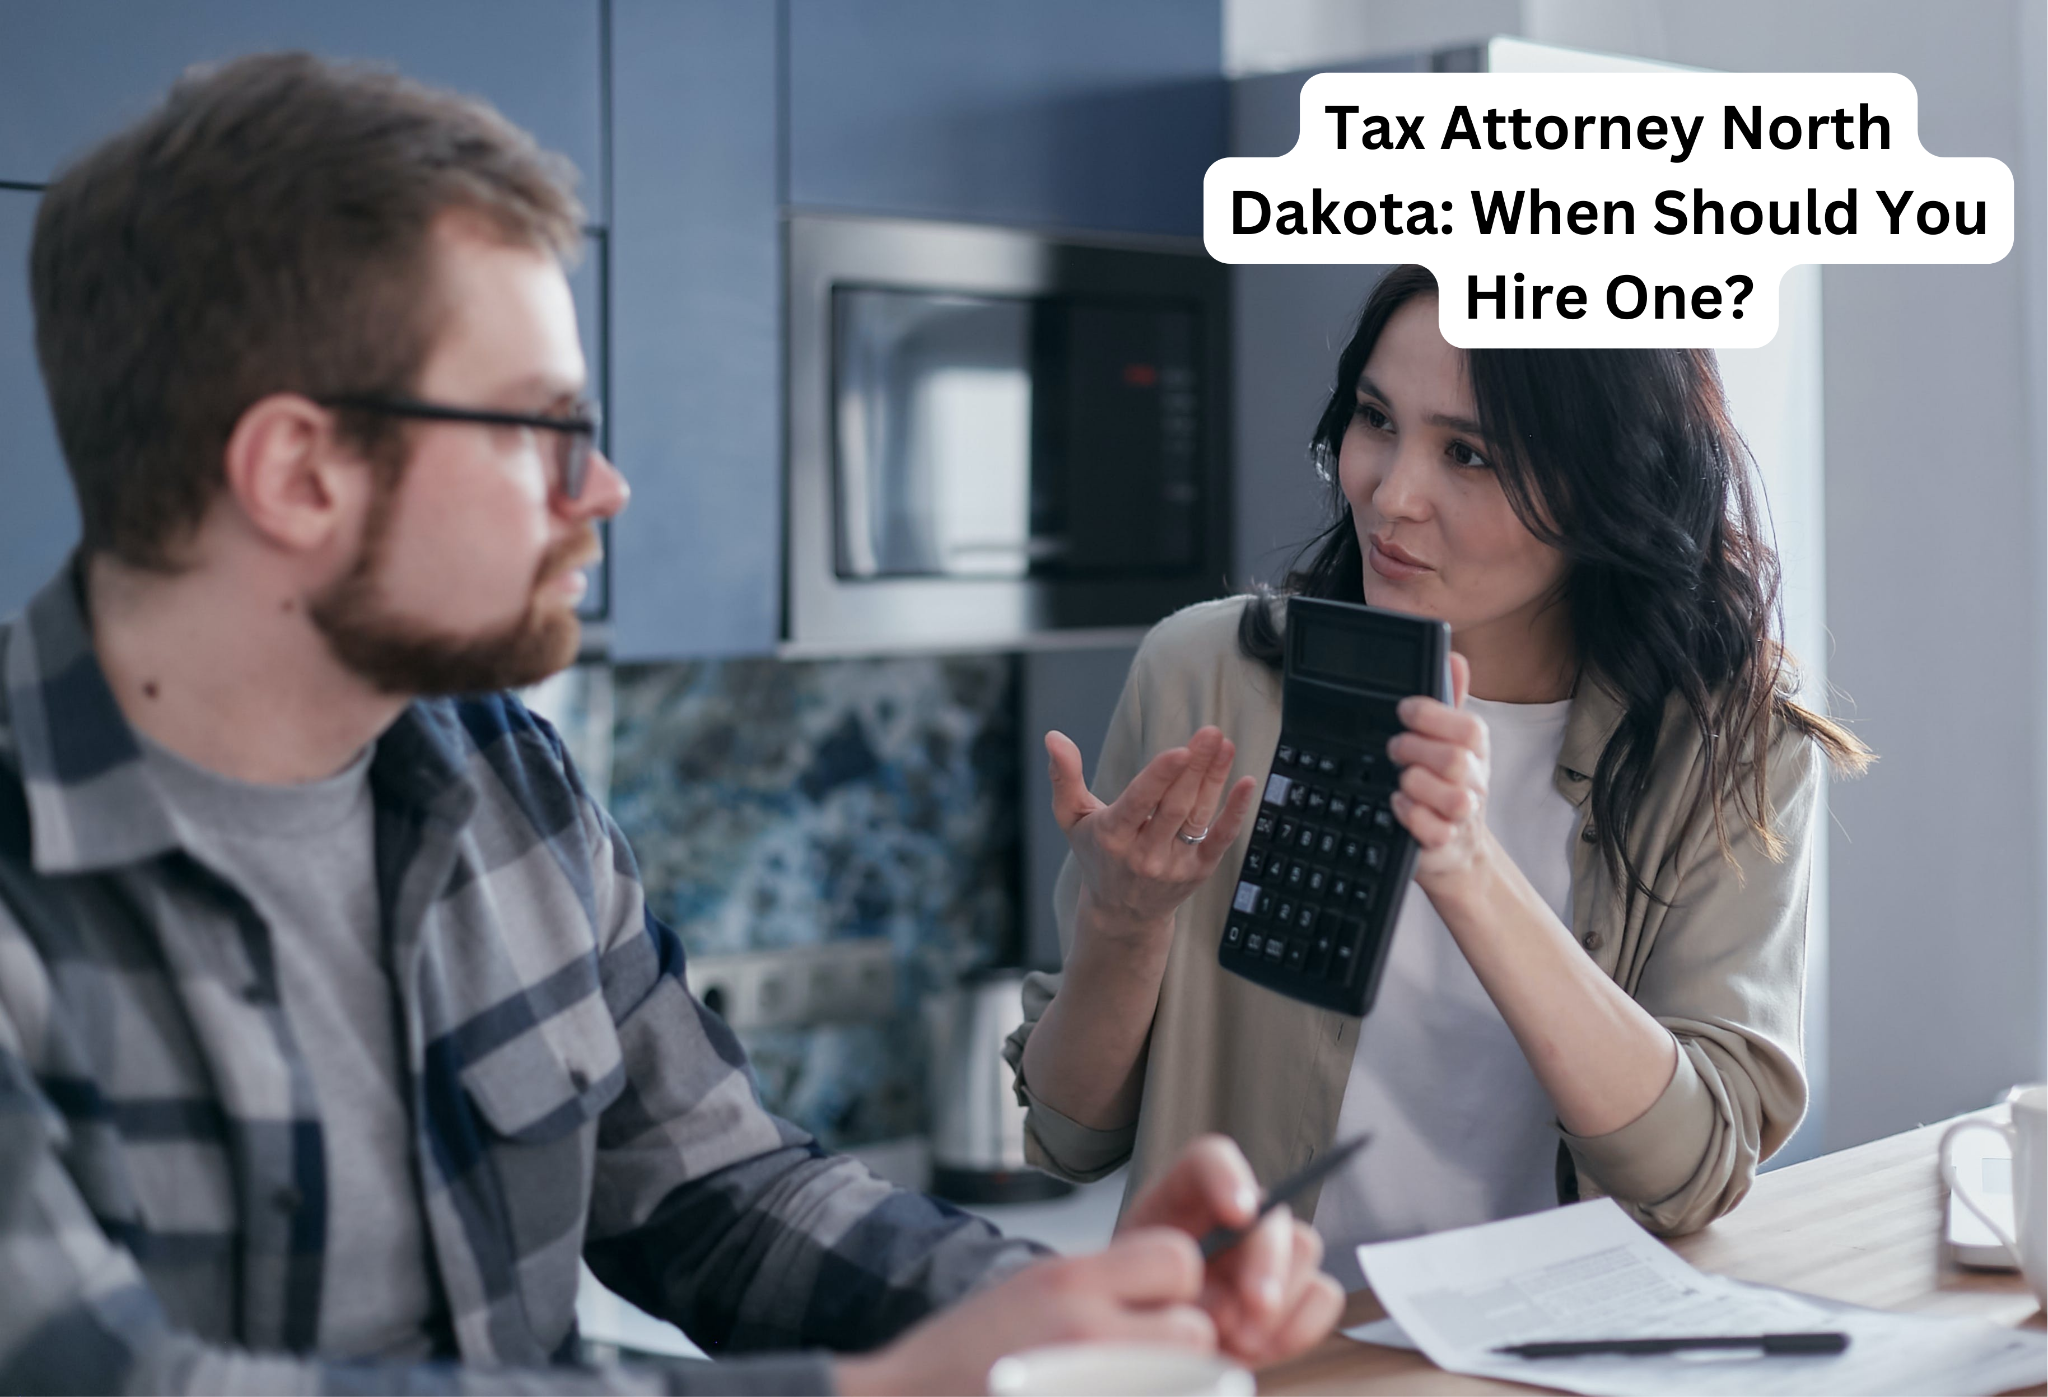 Tax Attorney North Dakota: When Should You Hire One?